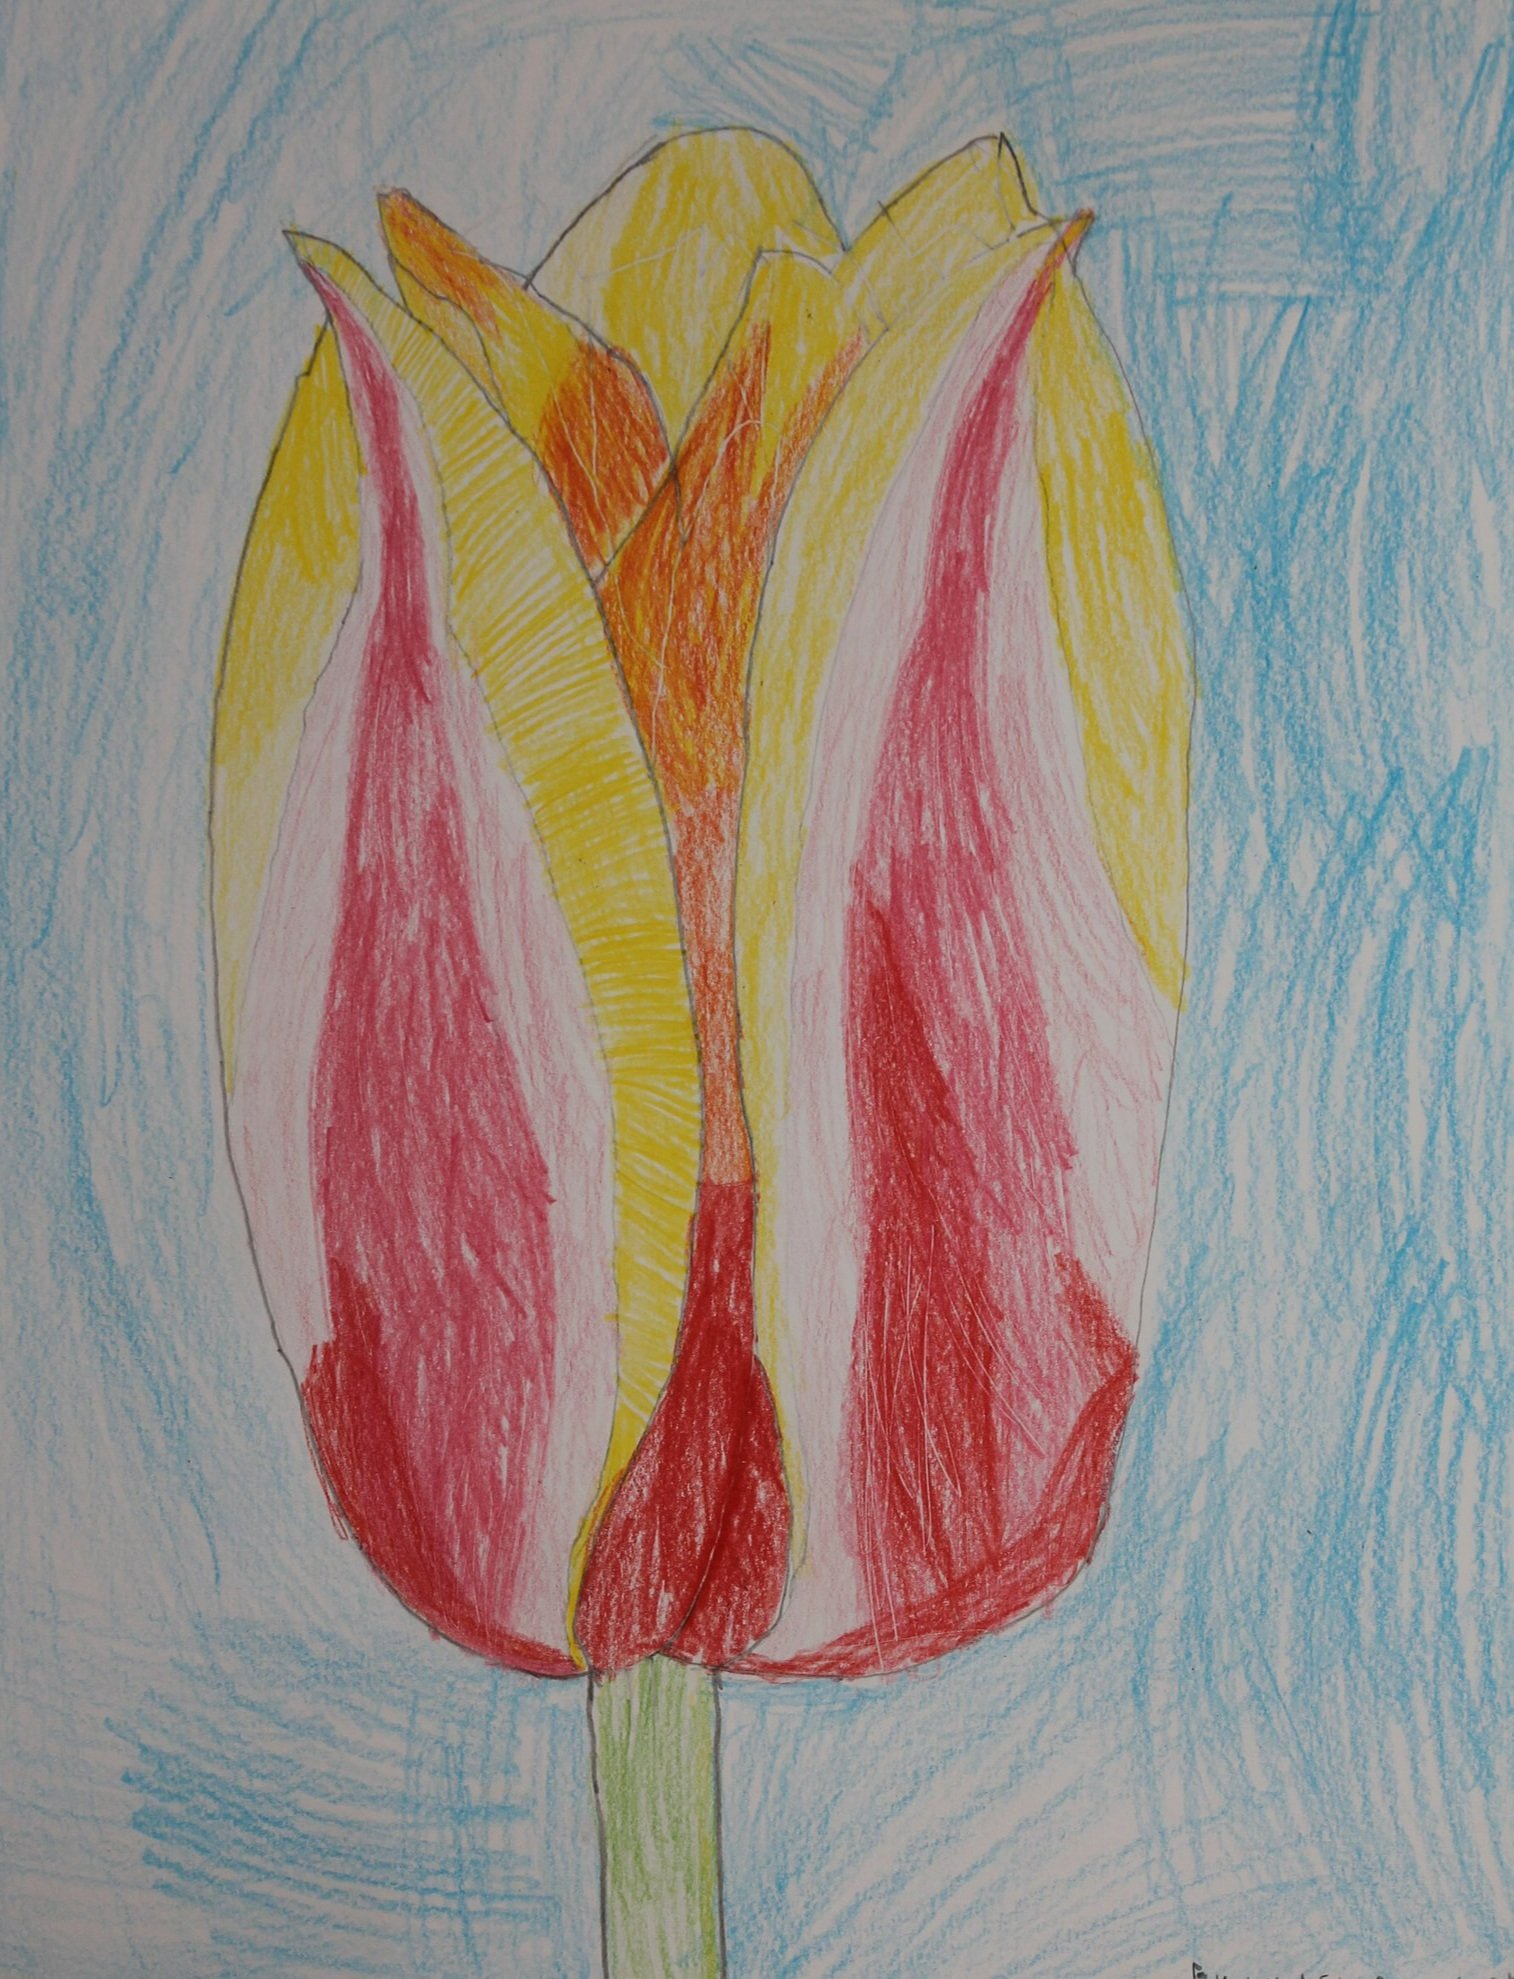 Evy, age 8, colored pencil